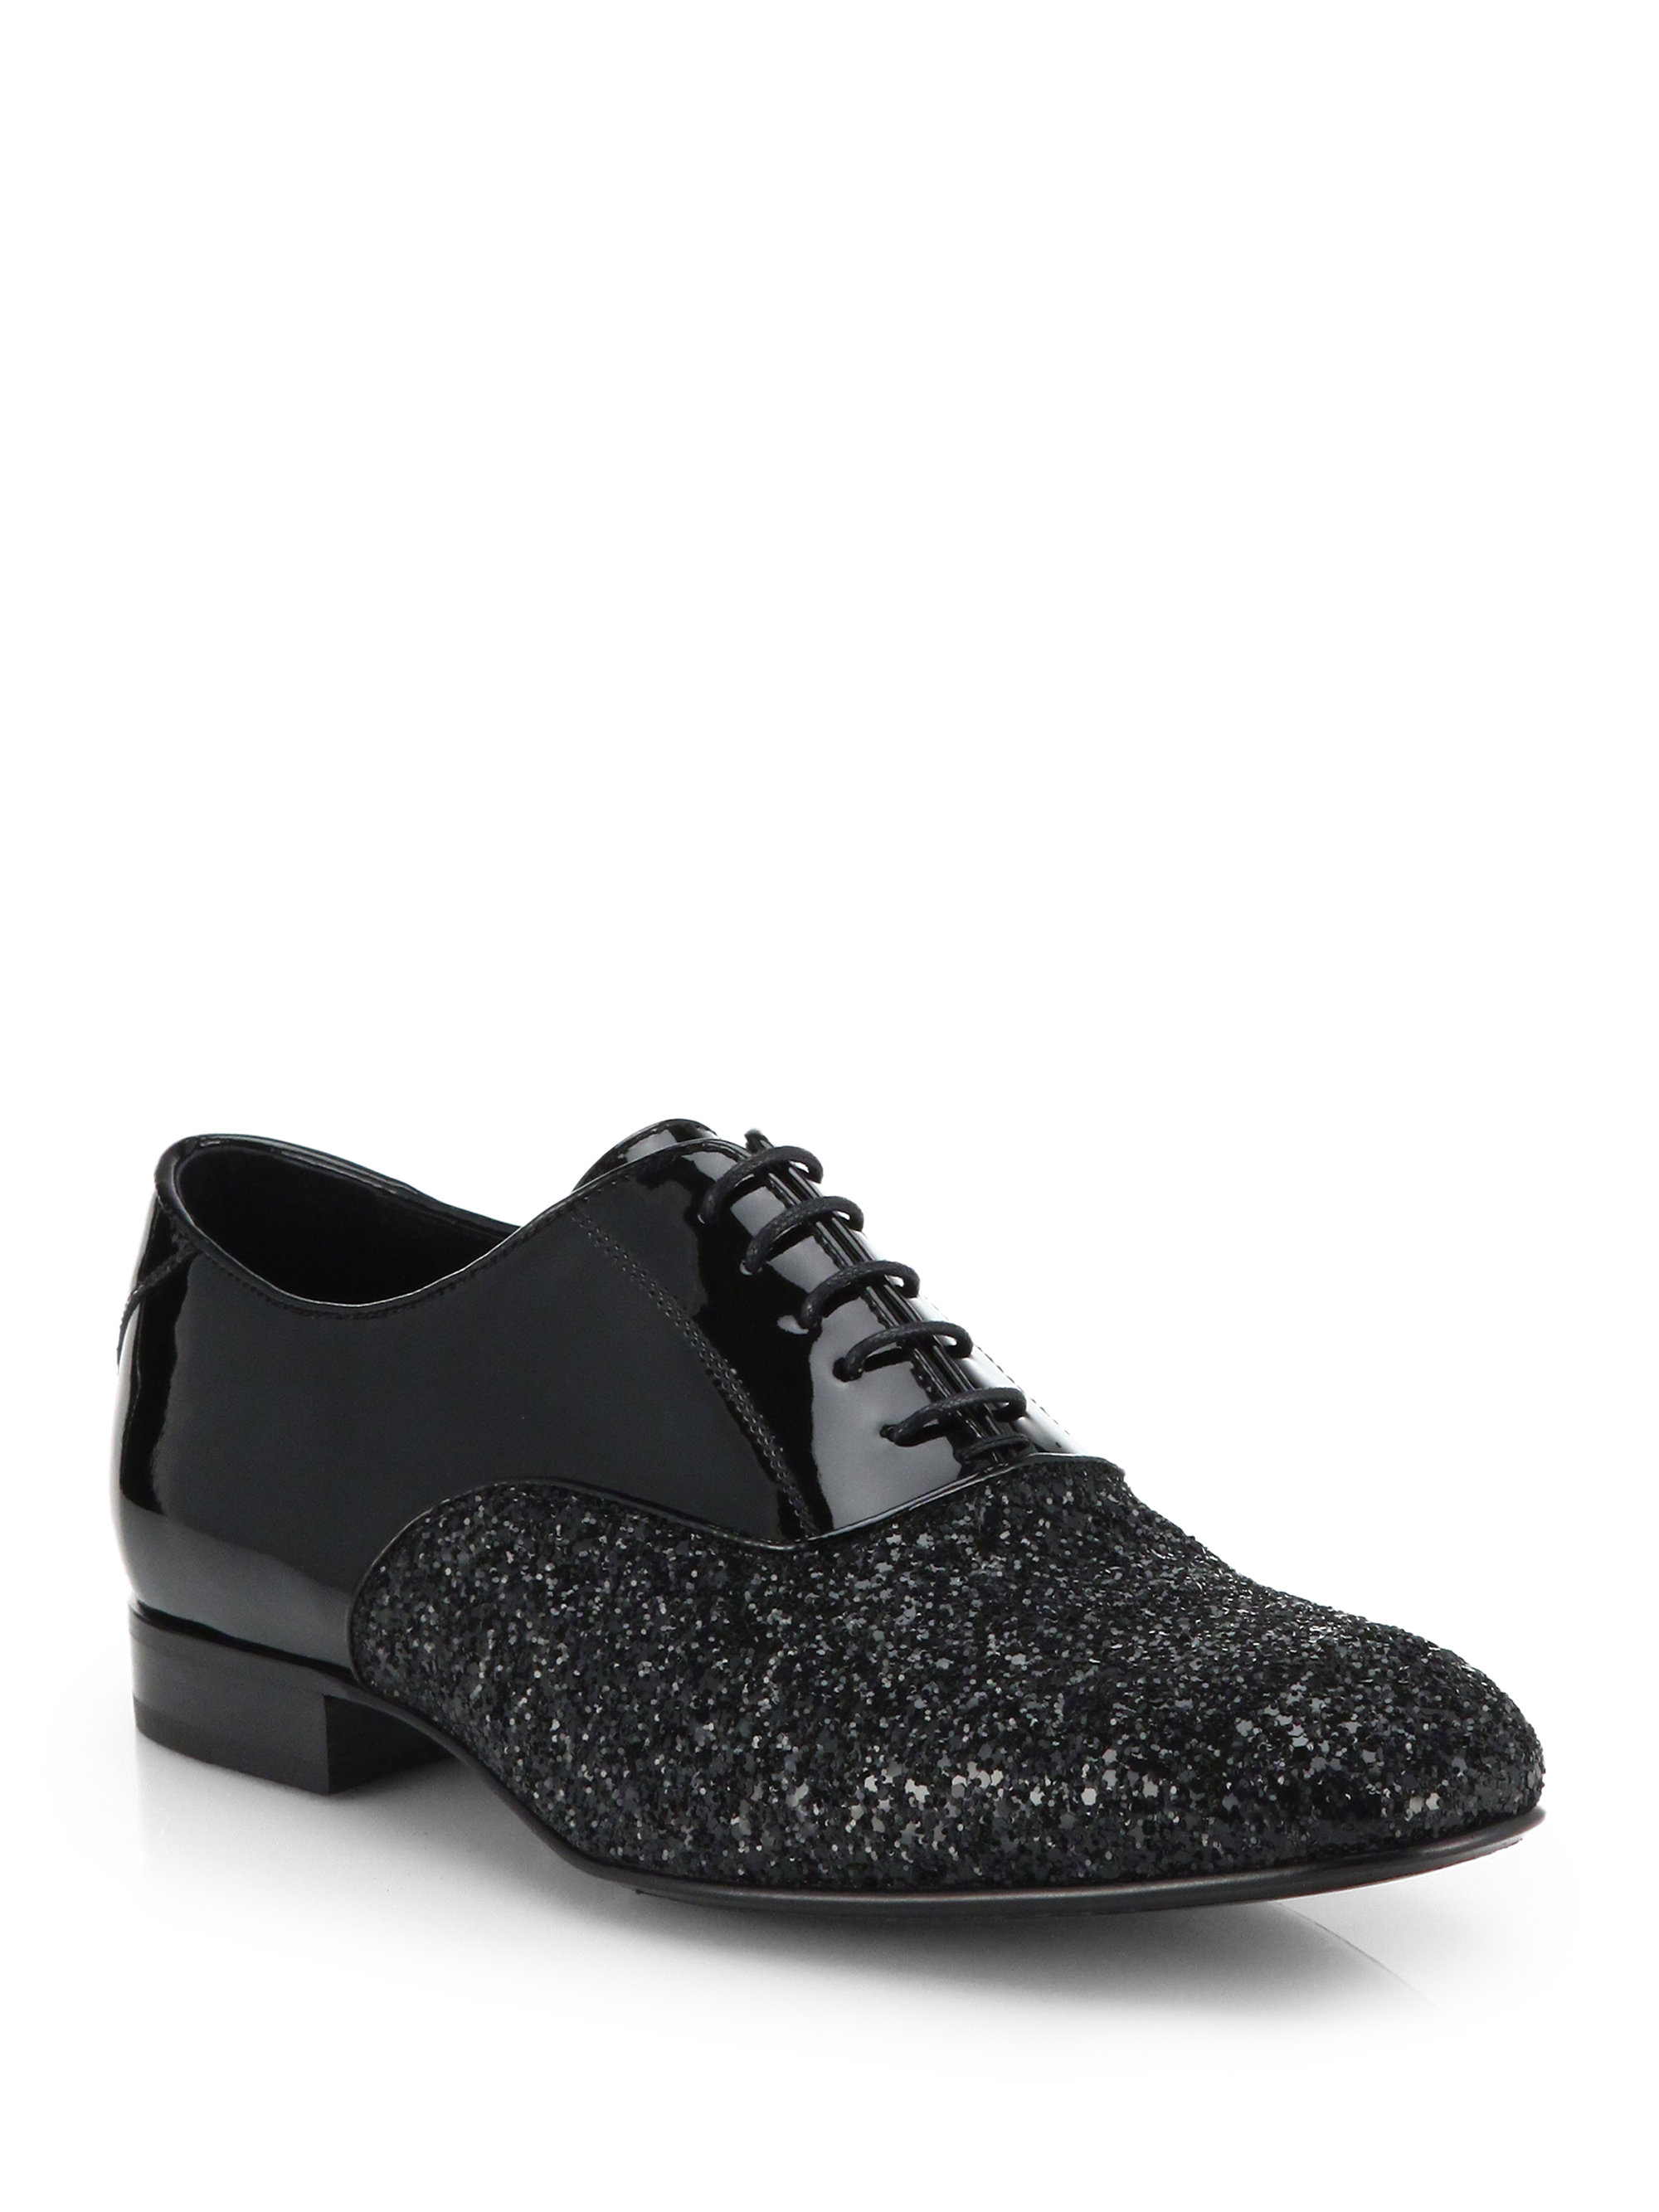 Lyst - Jimmy Choo Barker Glitter Patent Oxford Shoes in Black